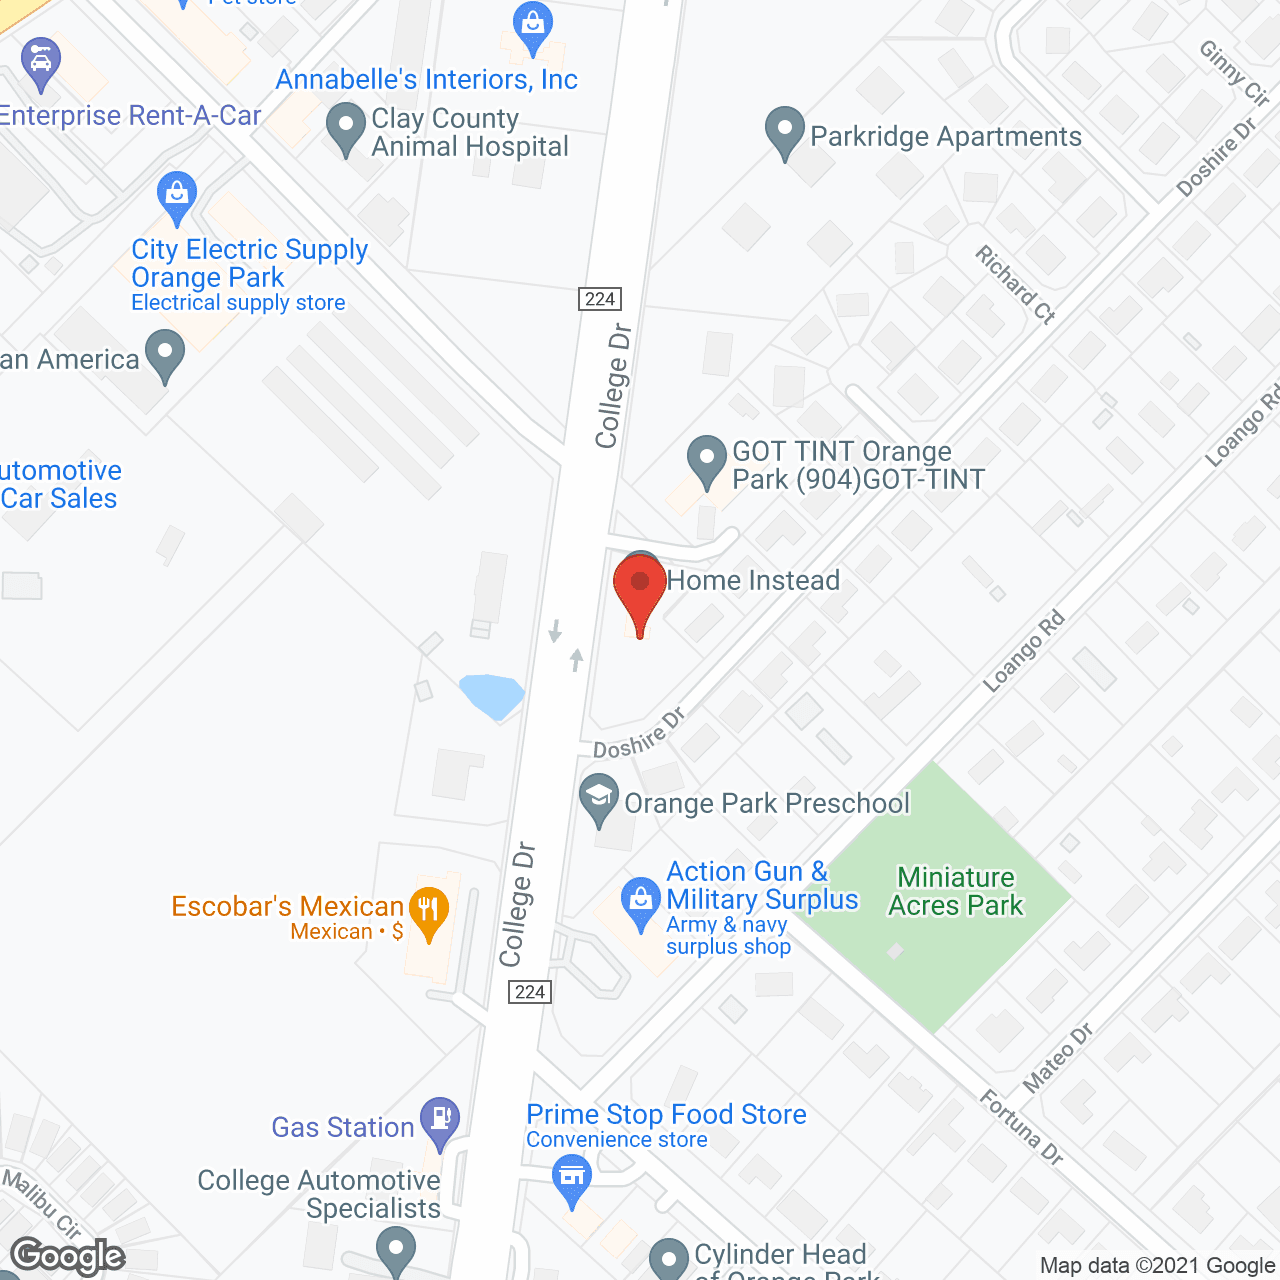 Home Instead - Orange Park, FL in google map